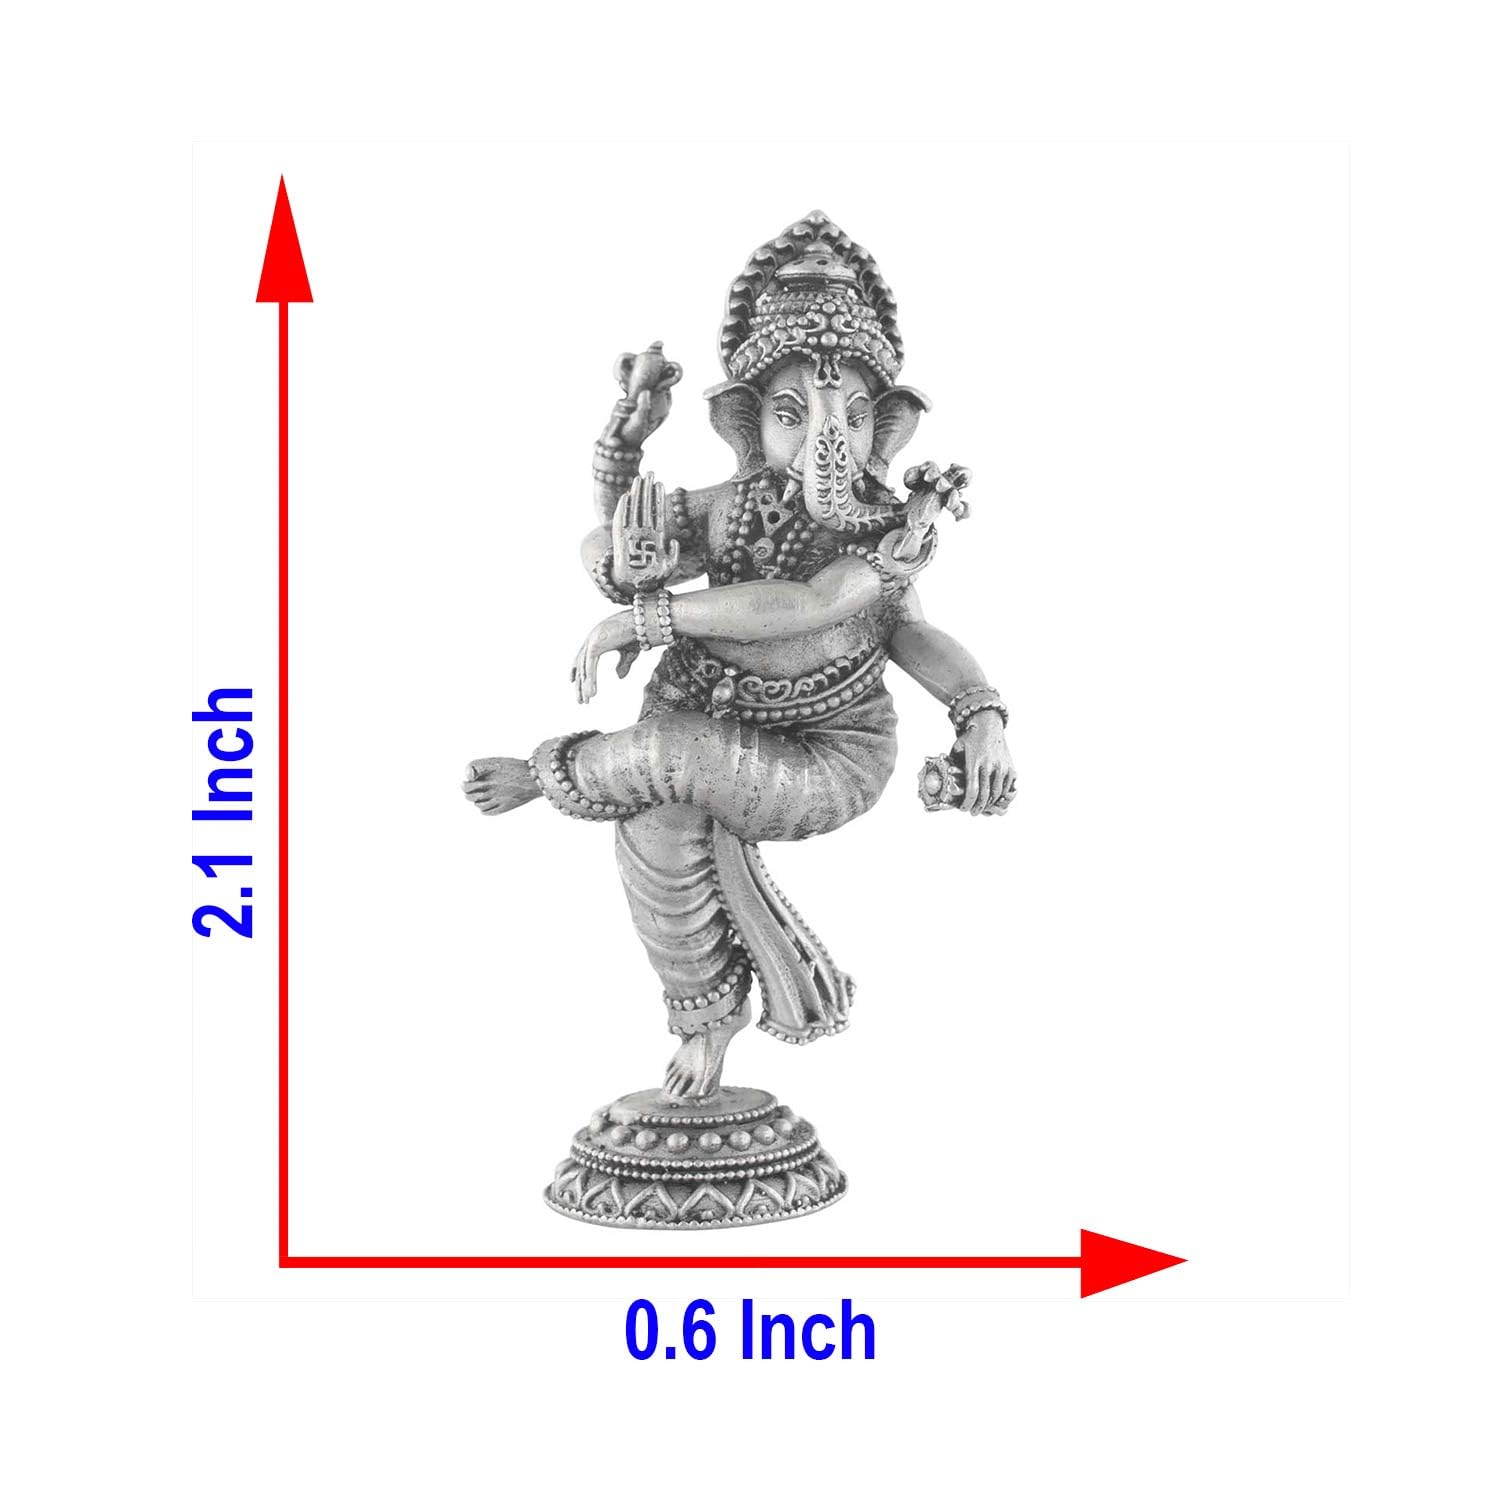 size of dancing ganesh idol